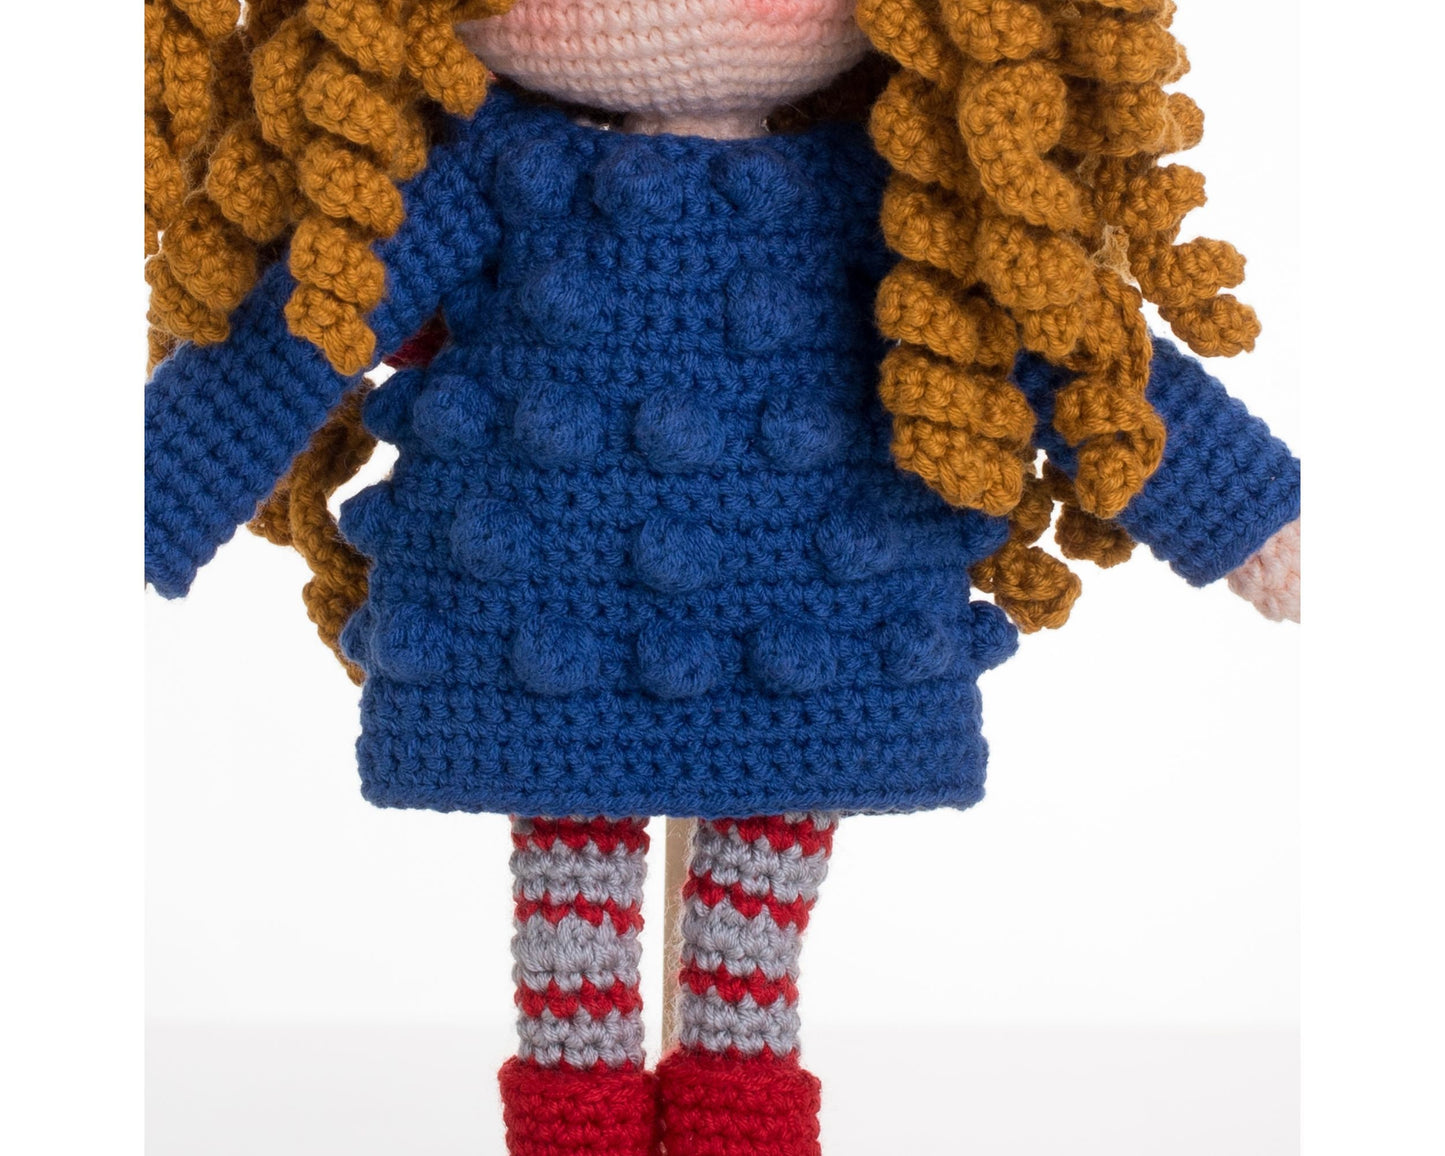 Curly Hair Doll, Crochet Doll, Amigurumi Doll, Granddaughter Gift, Daughter Gift, Christmas Doll, Handmade Doll, Knitted Dolls, Stuffed Doll